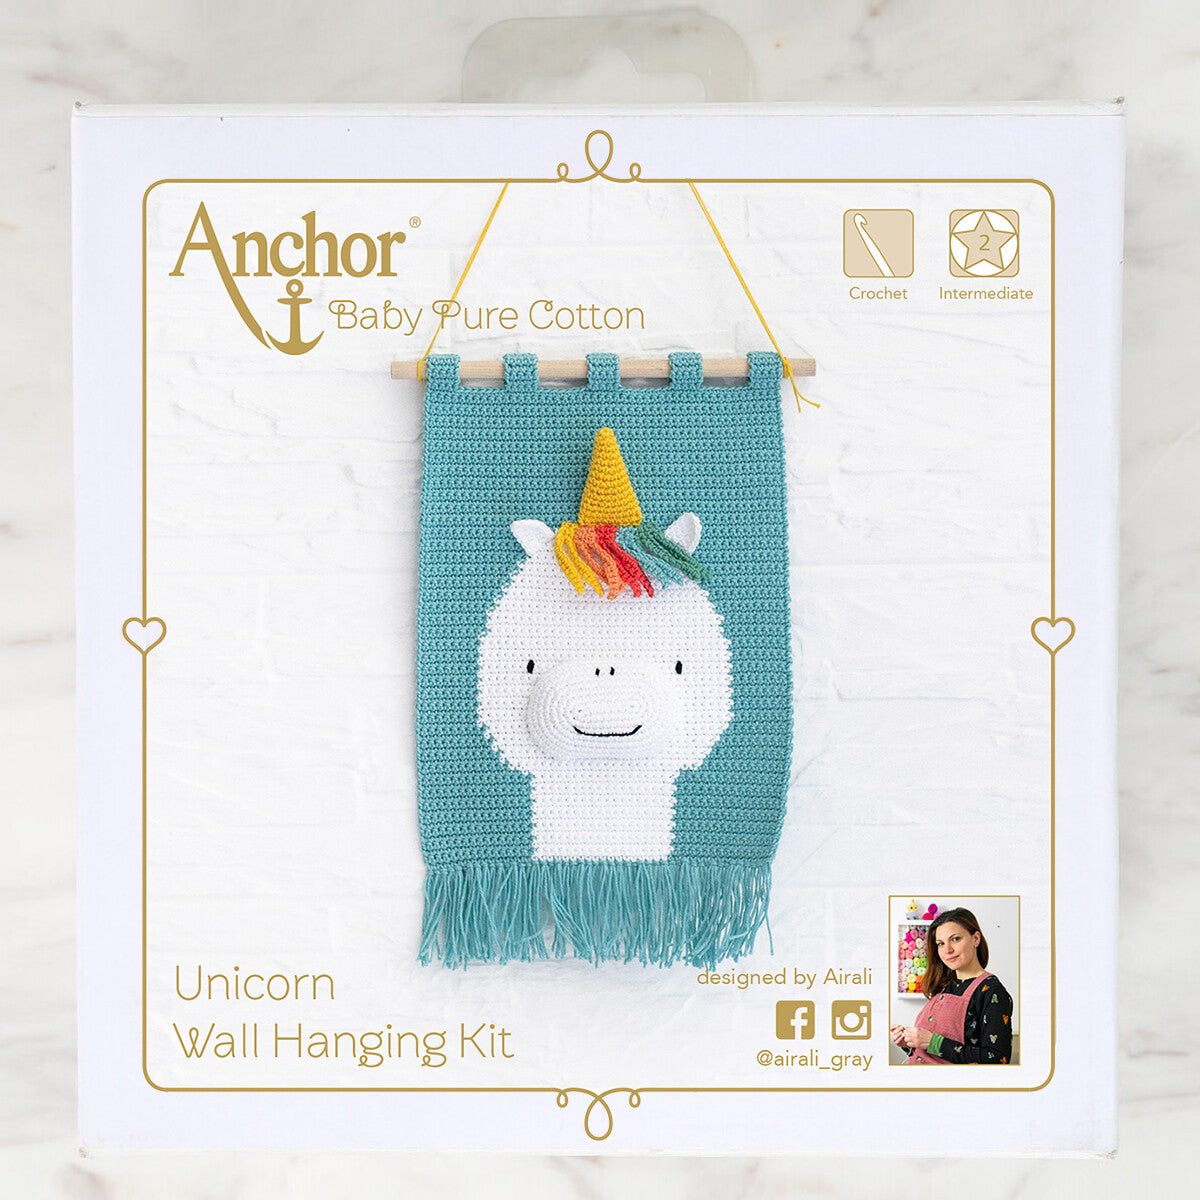 Anchor Unicorn Wall Hanging Kit - A28B003-09063